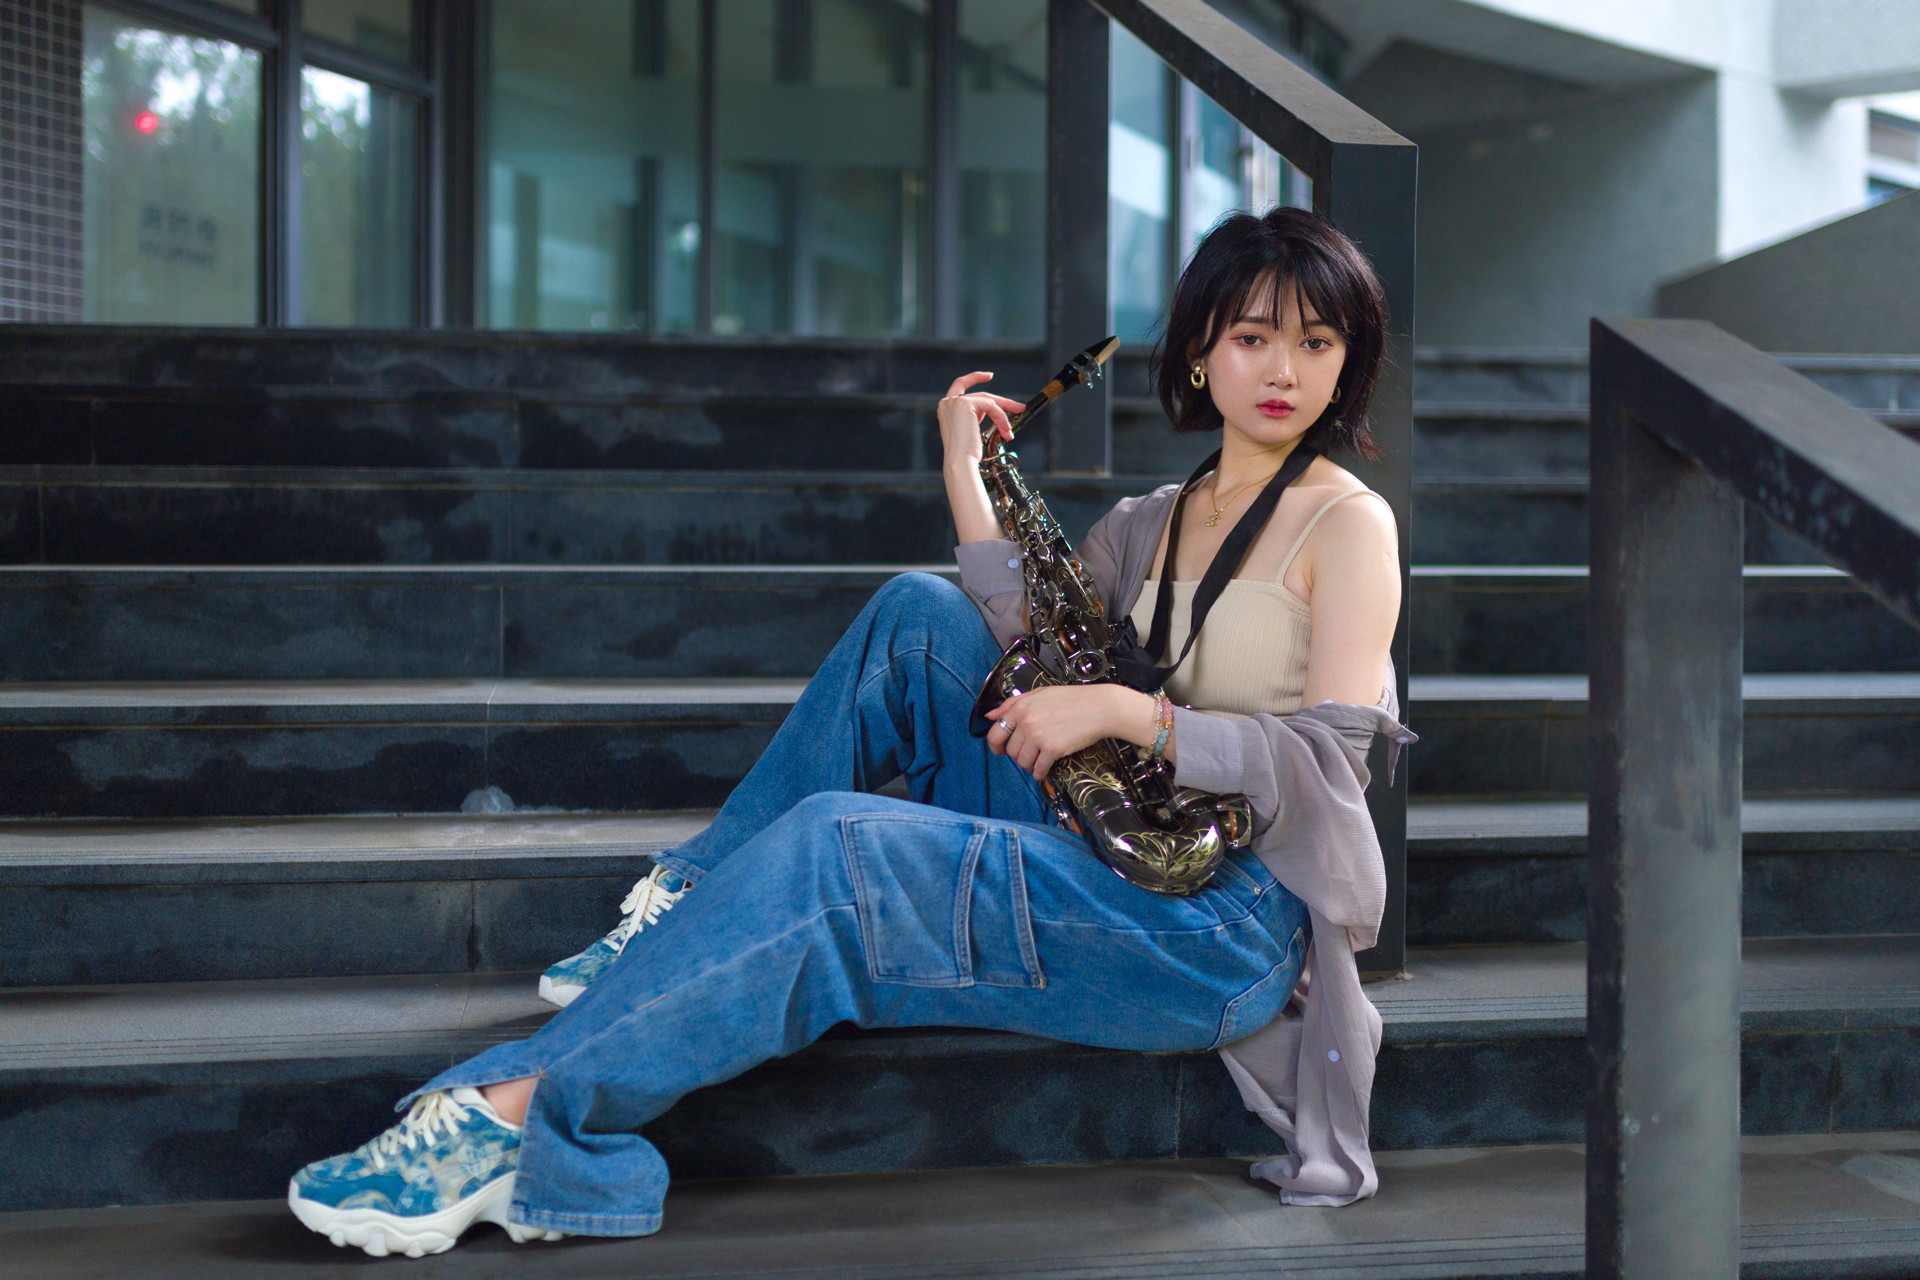 Asian Model Women Dark Hair Short Hair Sitting Stairs Saxophones Jeans 1920x1280